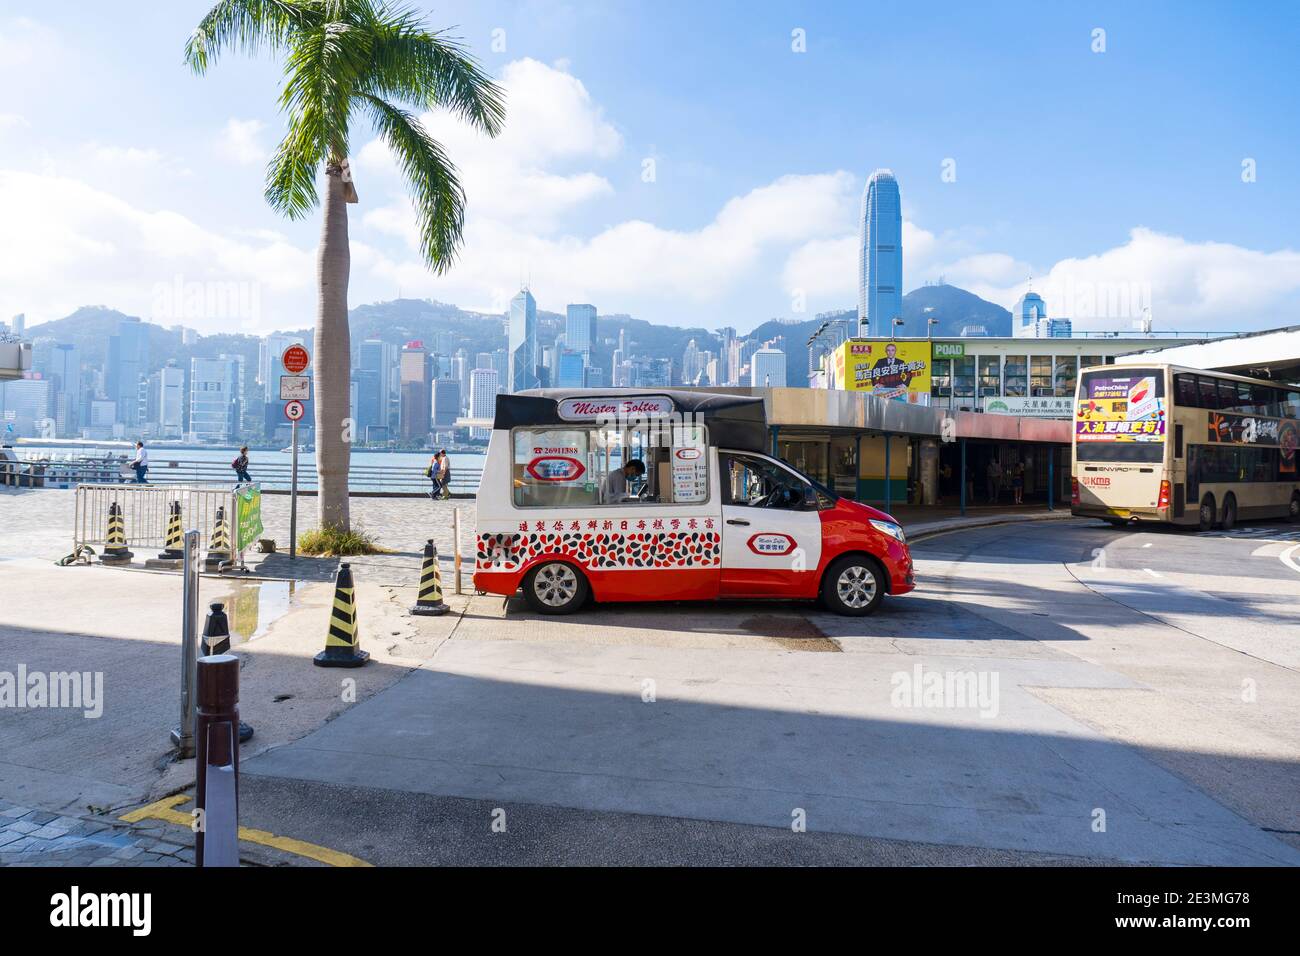 Mister Softee Ice Cream Truck parked next to Coconut Tree, Kowloon. Medium Shot, Eye Level View Stock Photo